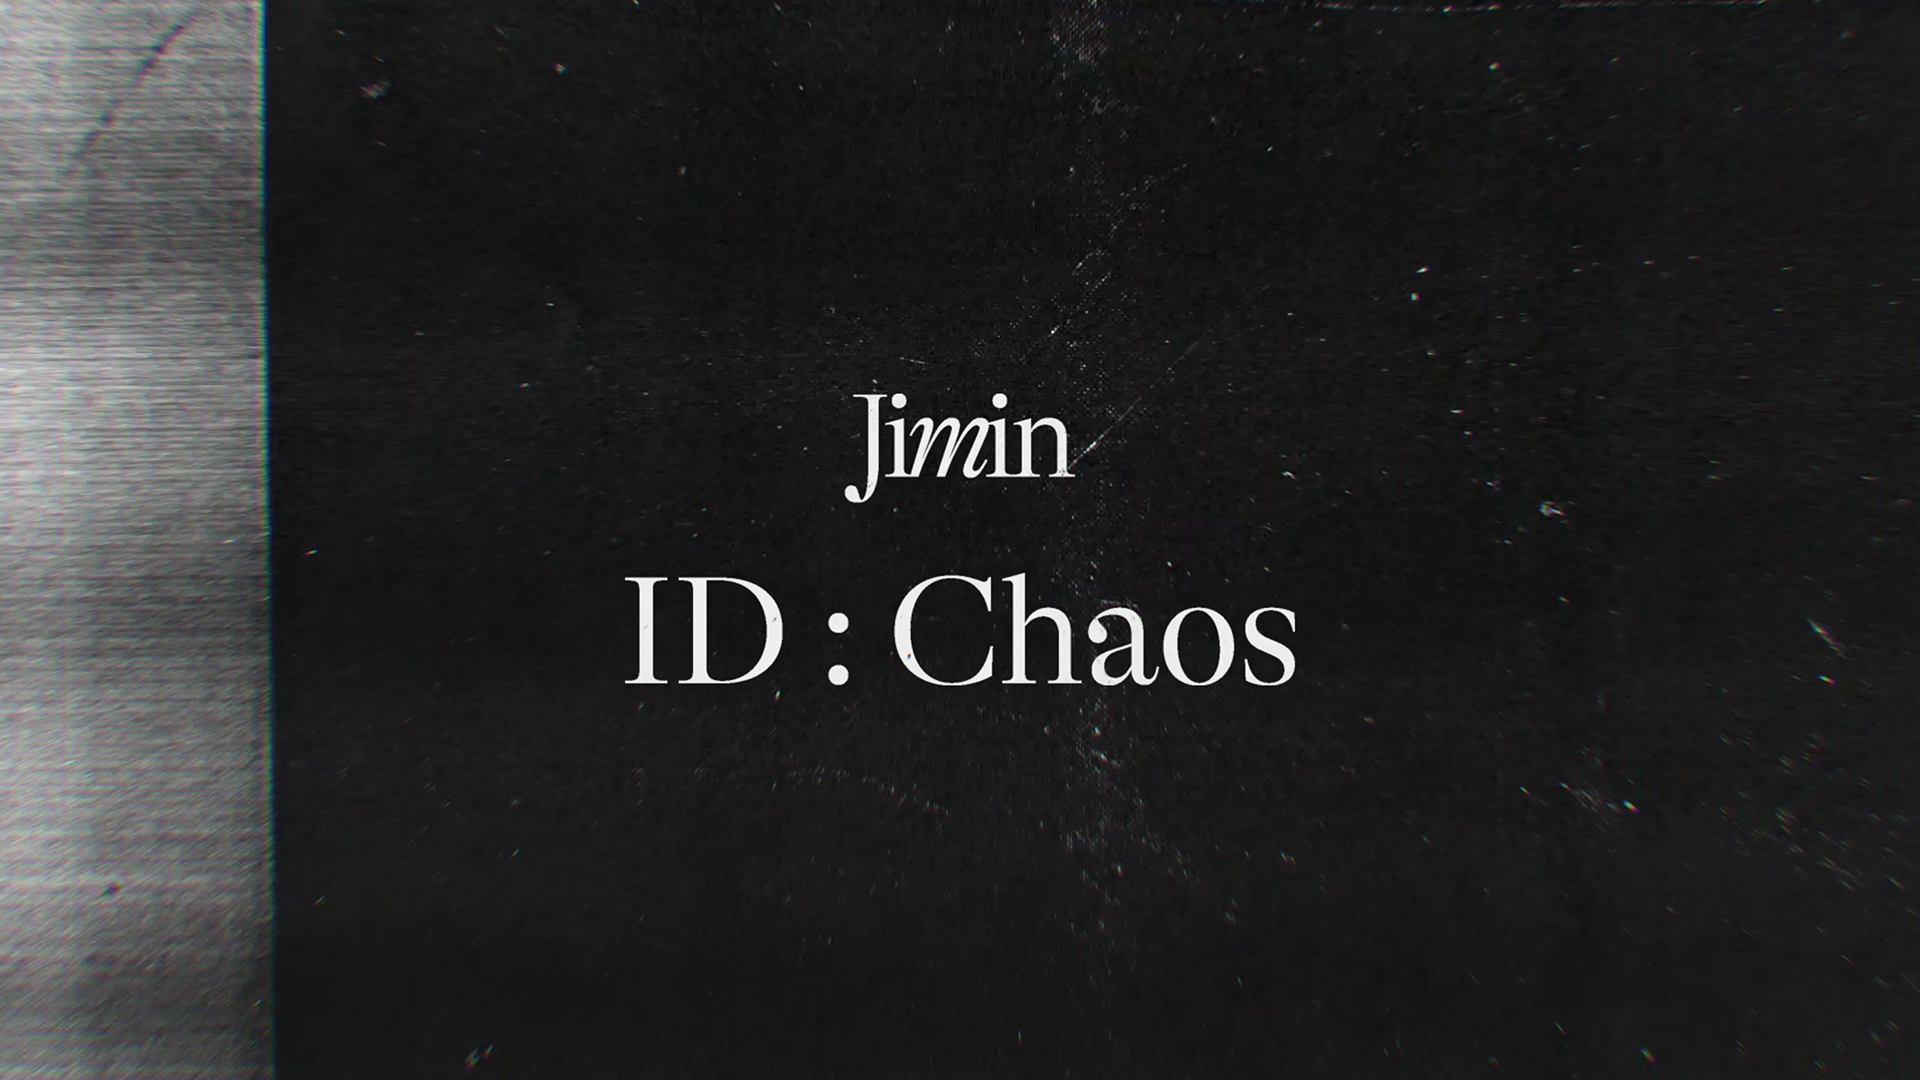 VOGUE KOREA & GQ KOREA - JIMIN [ Louis Vuitton ] #JIMIN #BTS